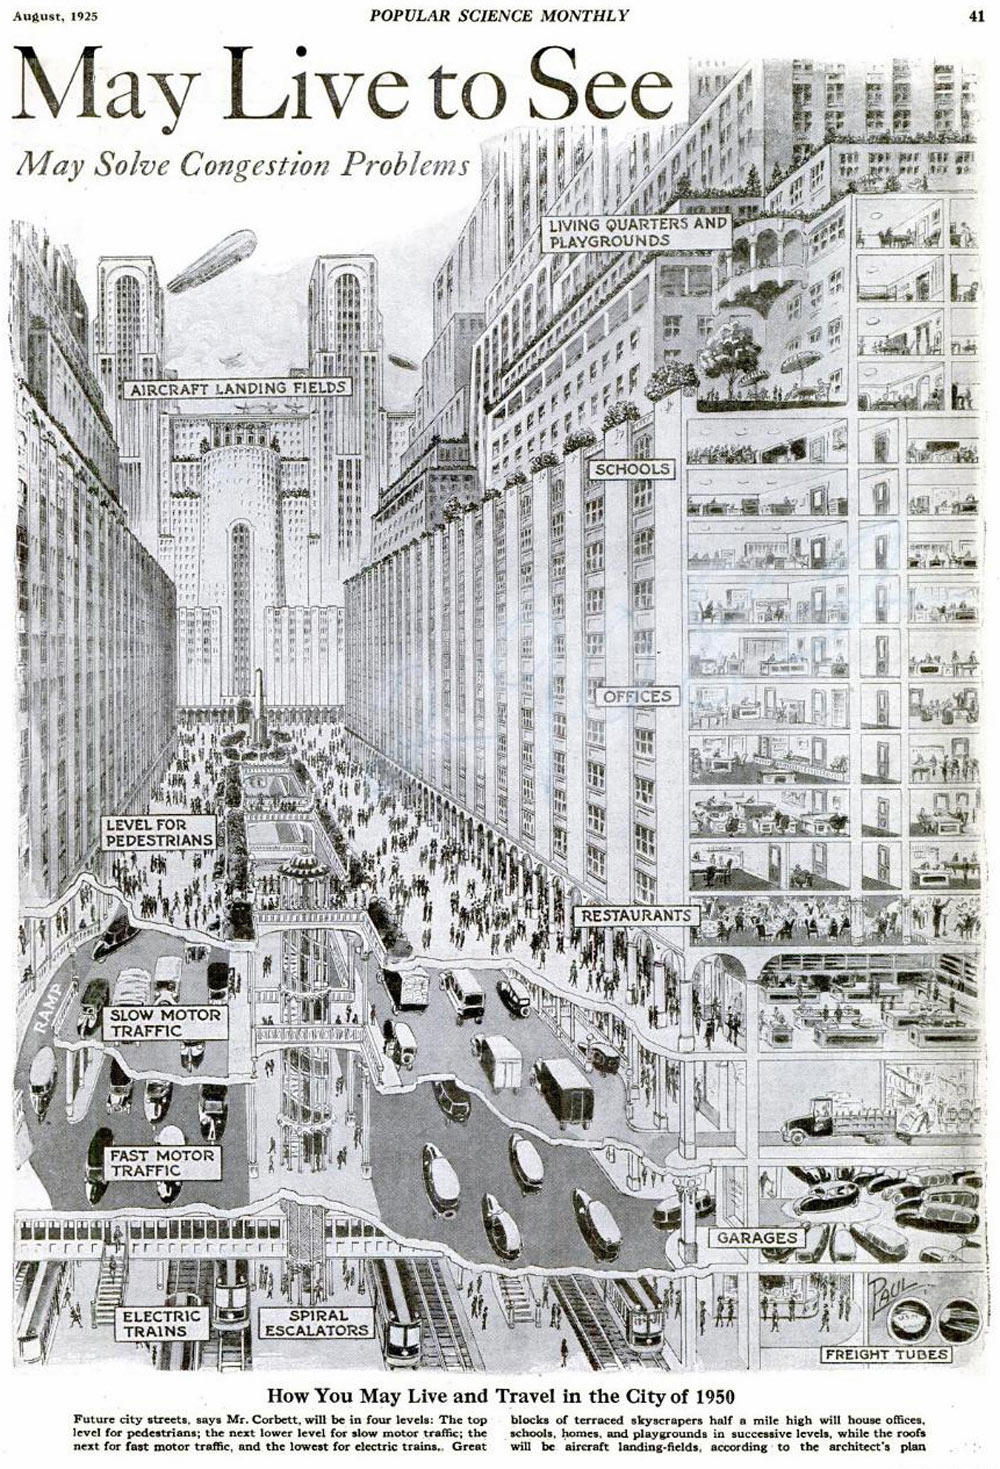 Future-city-popular-science-1925